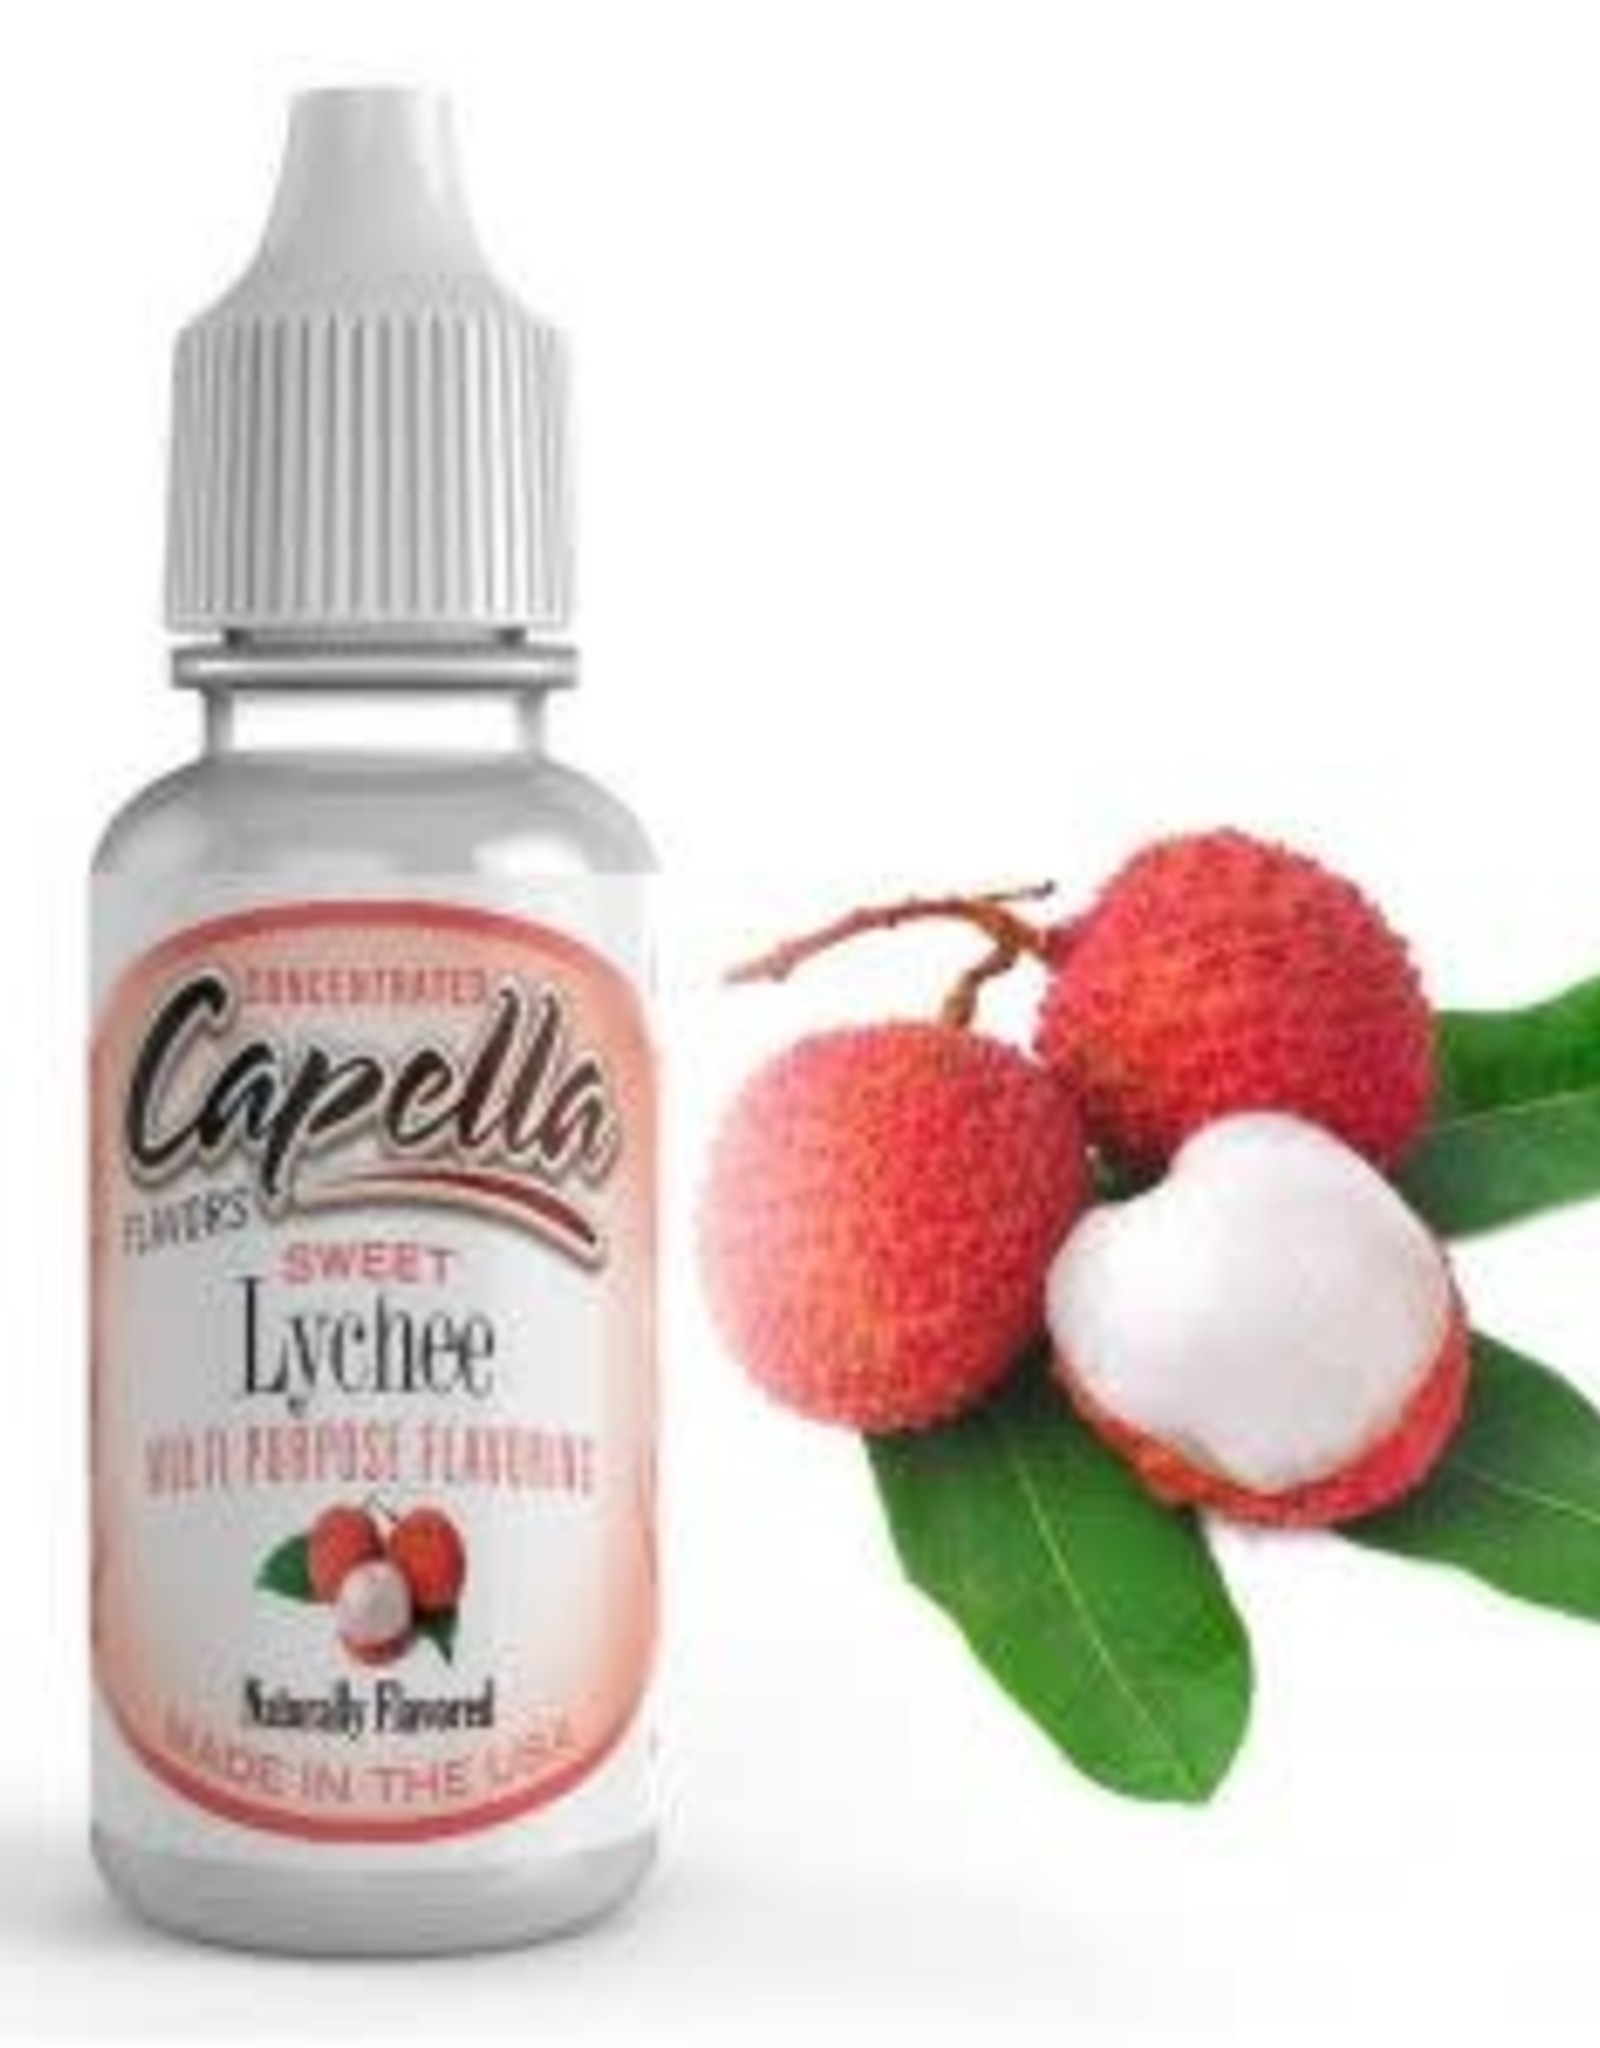 Capella Capella - Sweet Lychee Aroma 13ml